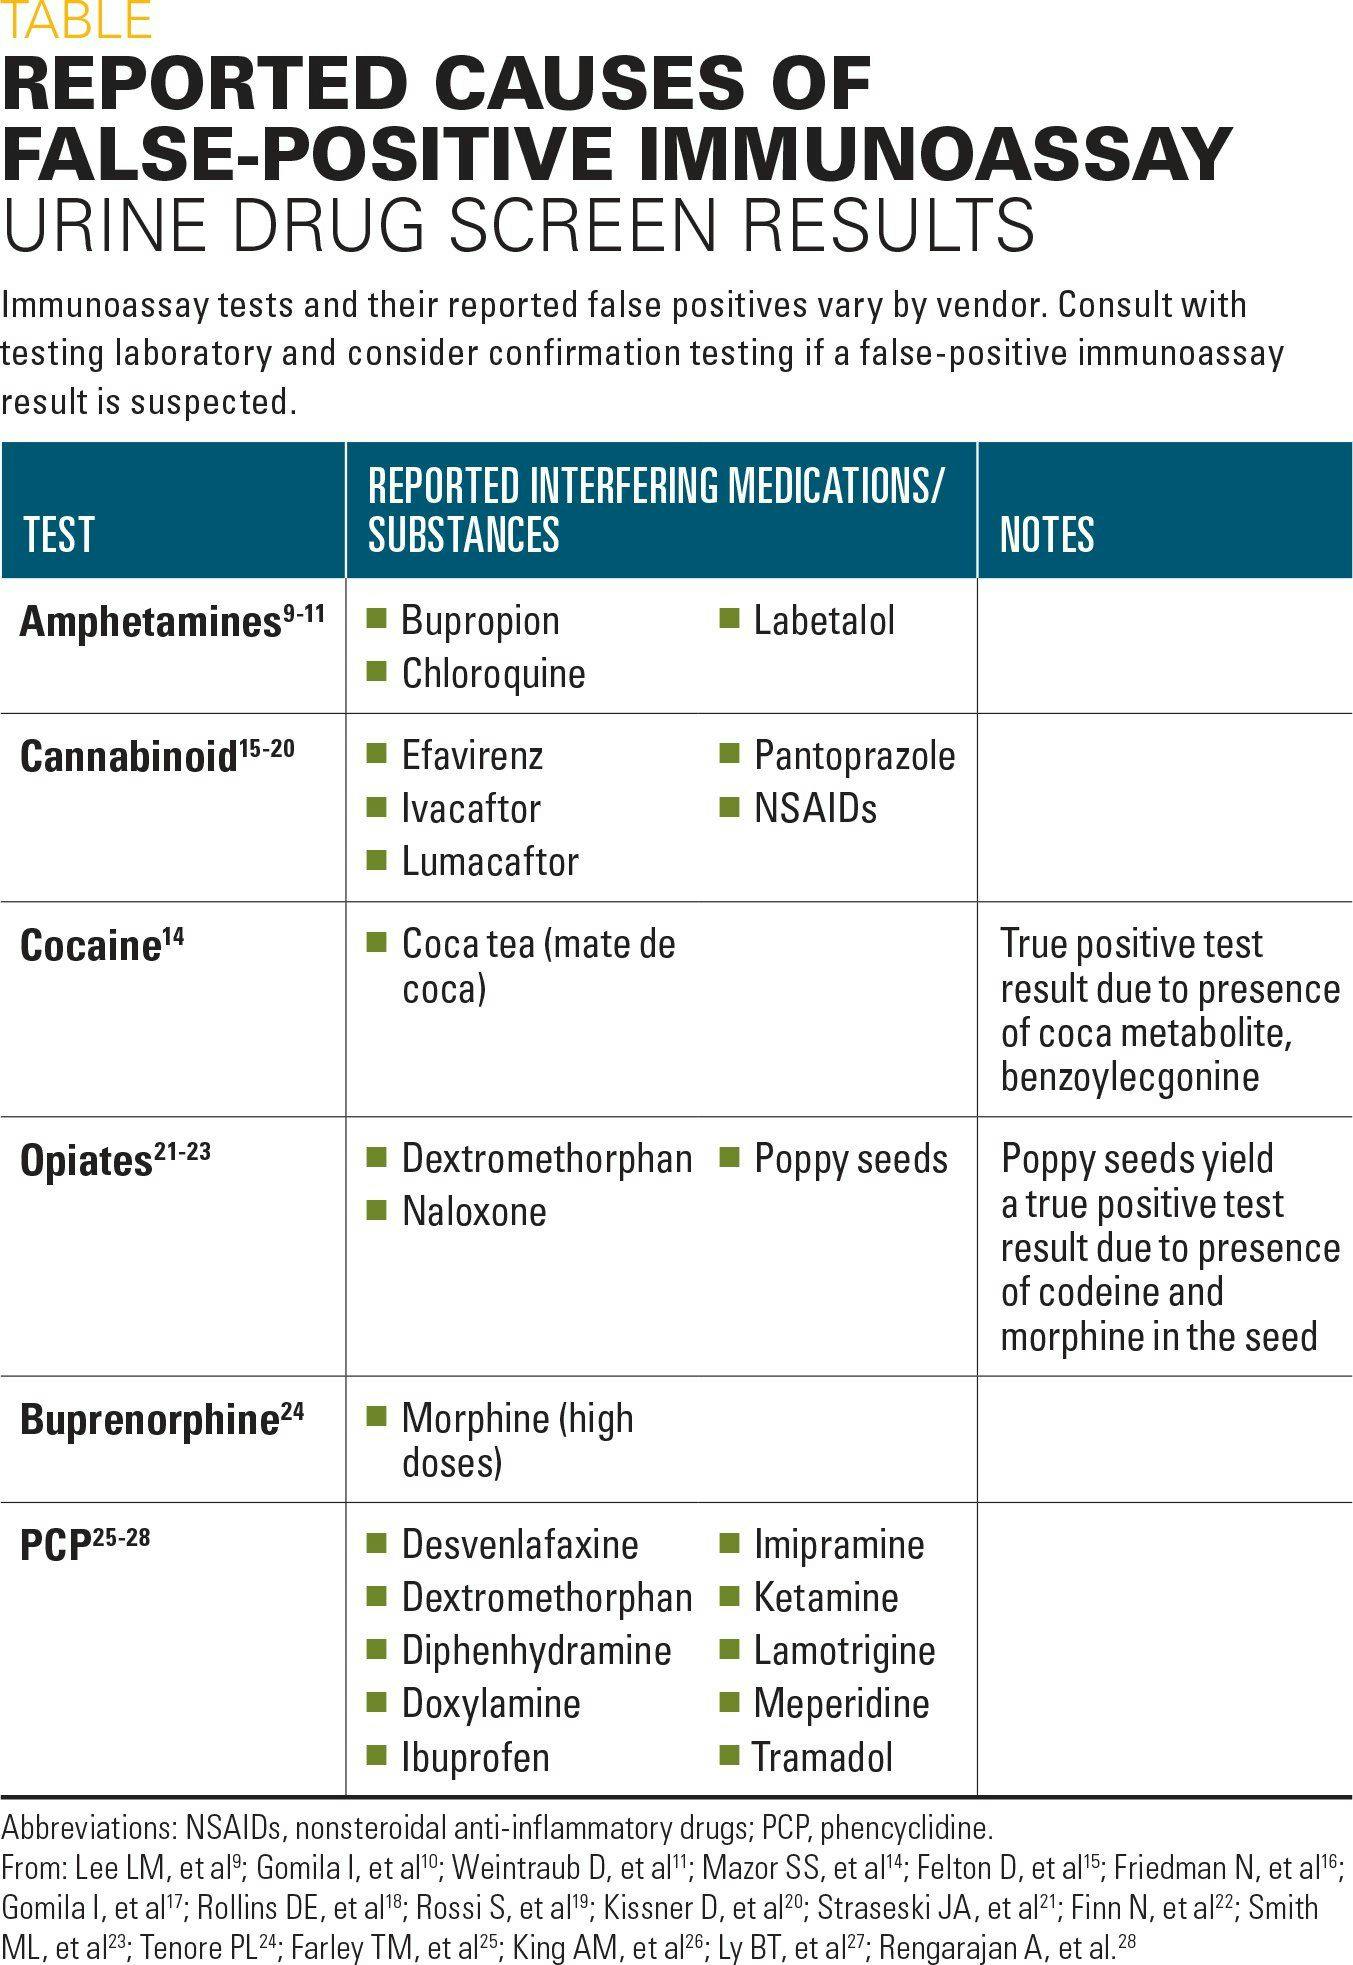 Reported causes of false-positive immunoassay urine drug screen results